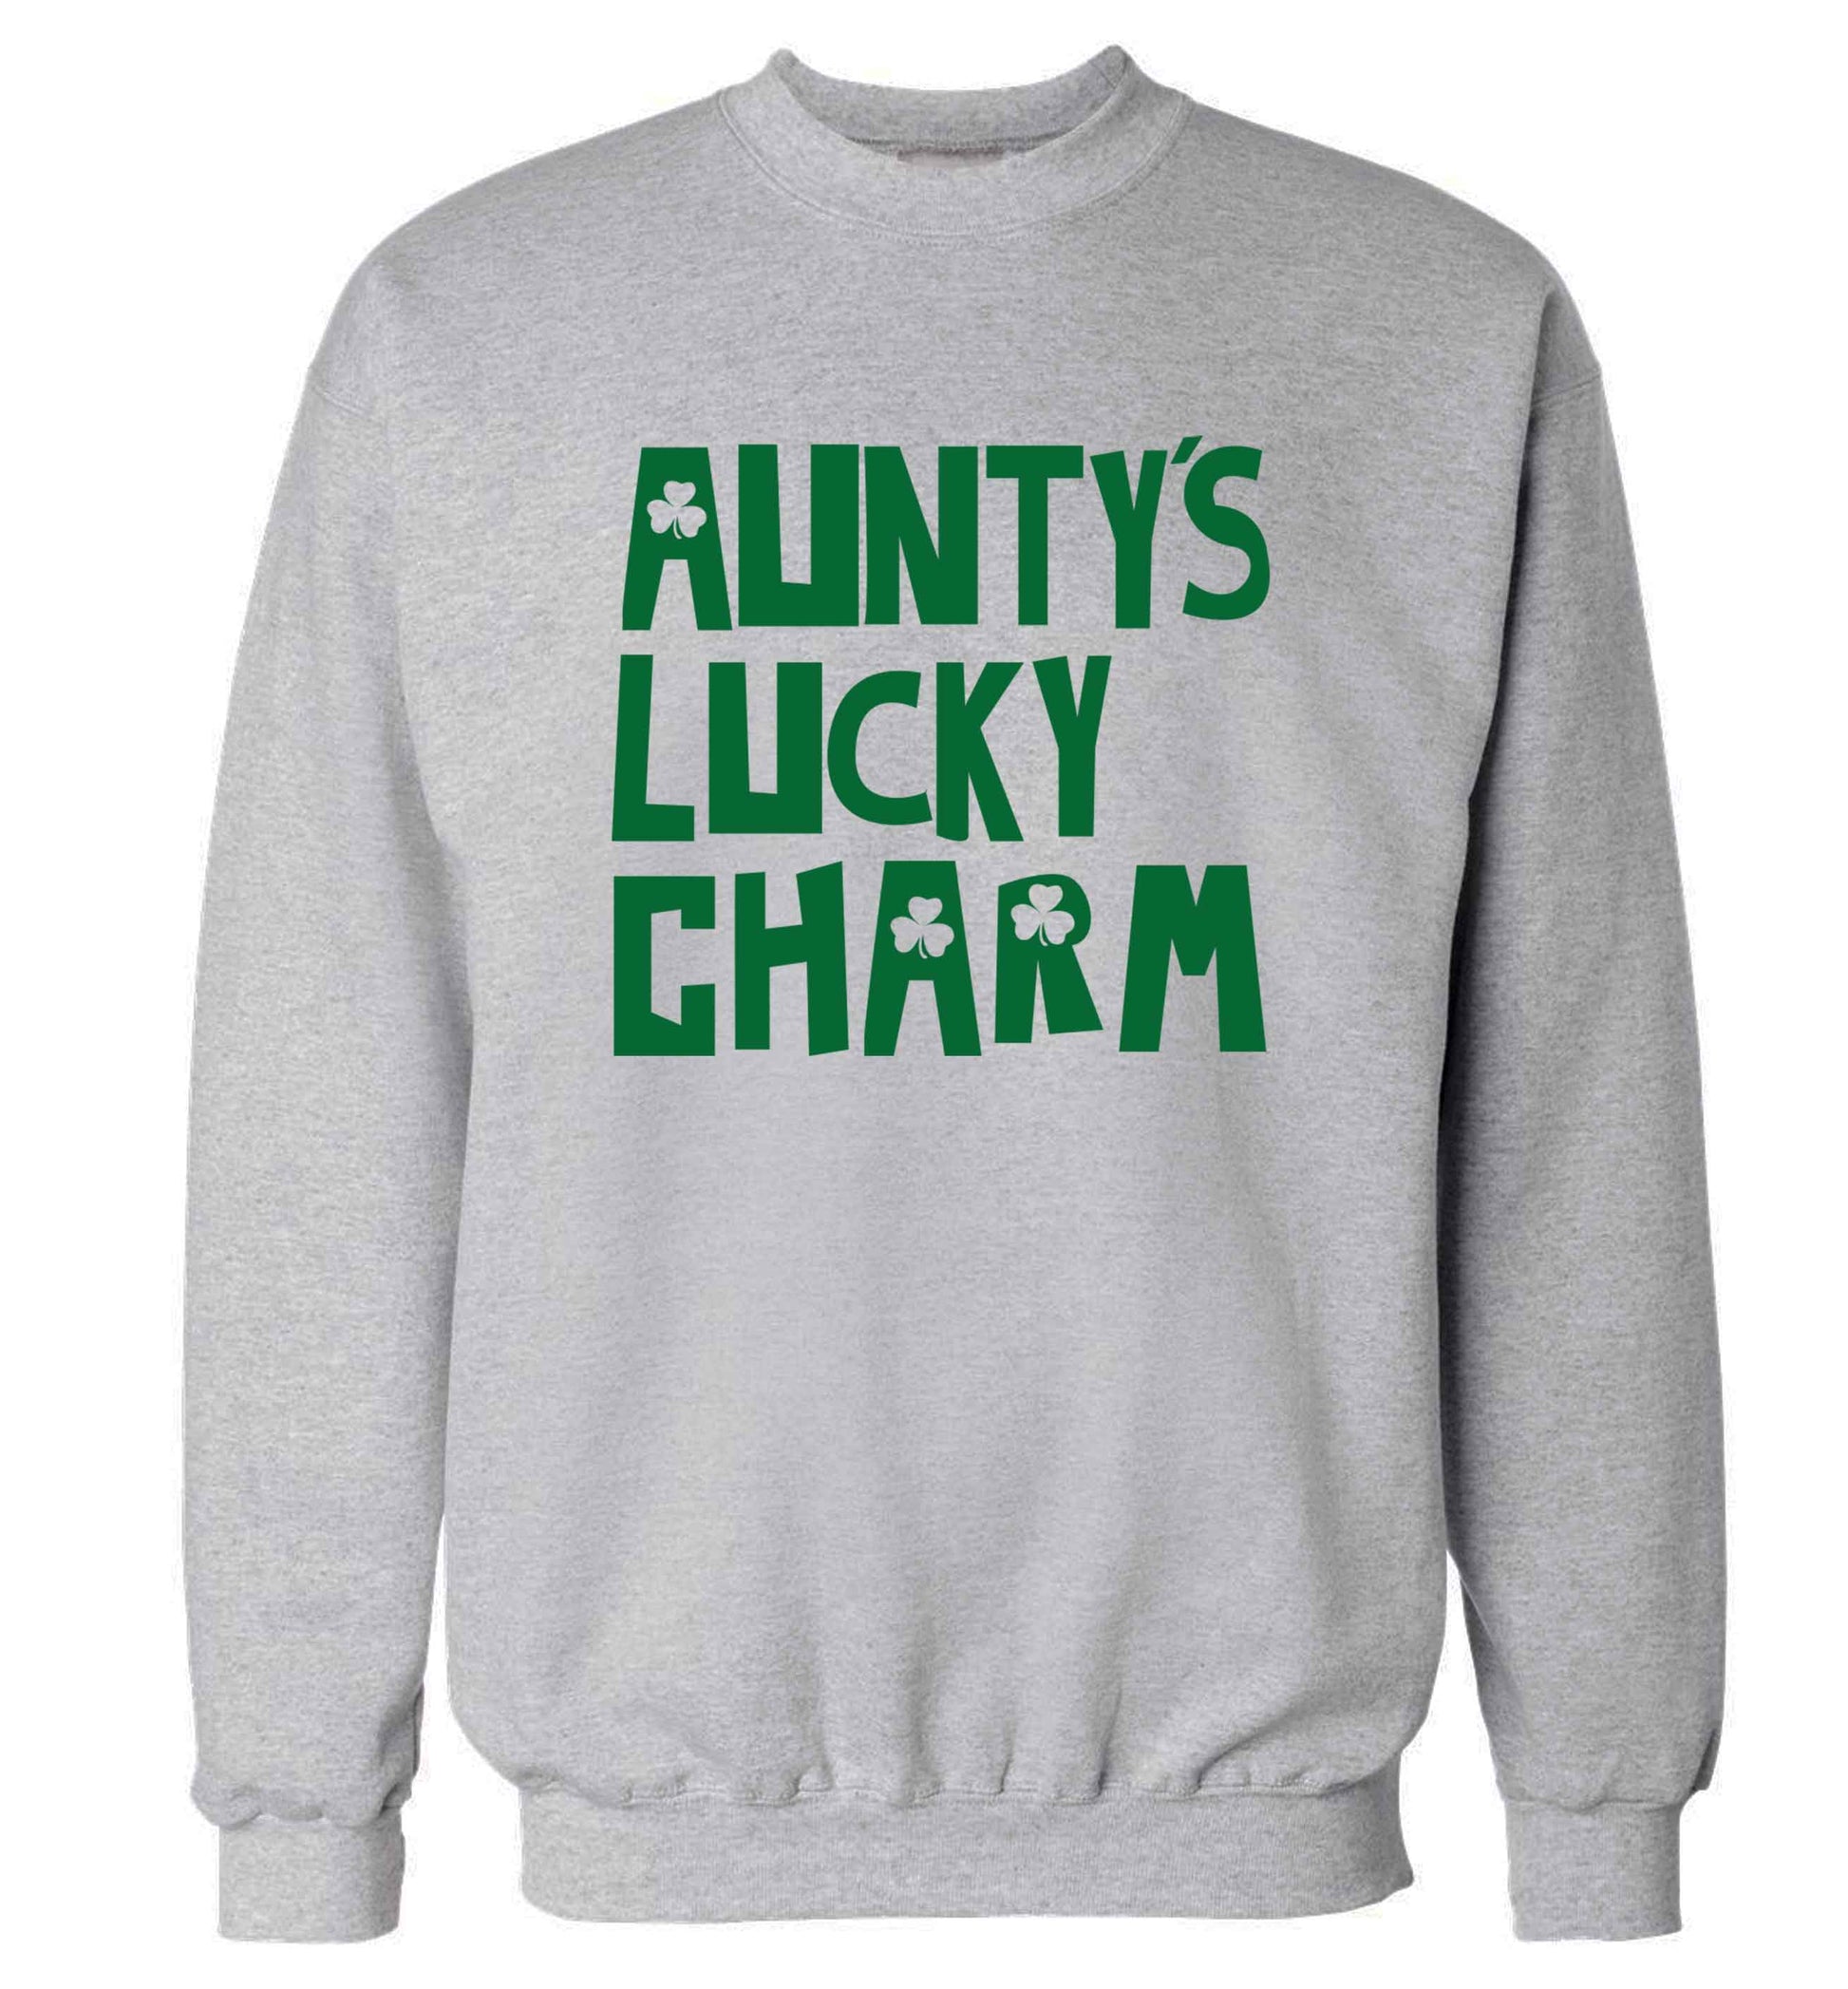 Aunty's lucky charm adult's unisex grey sweater 2XL